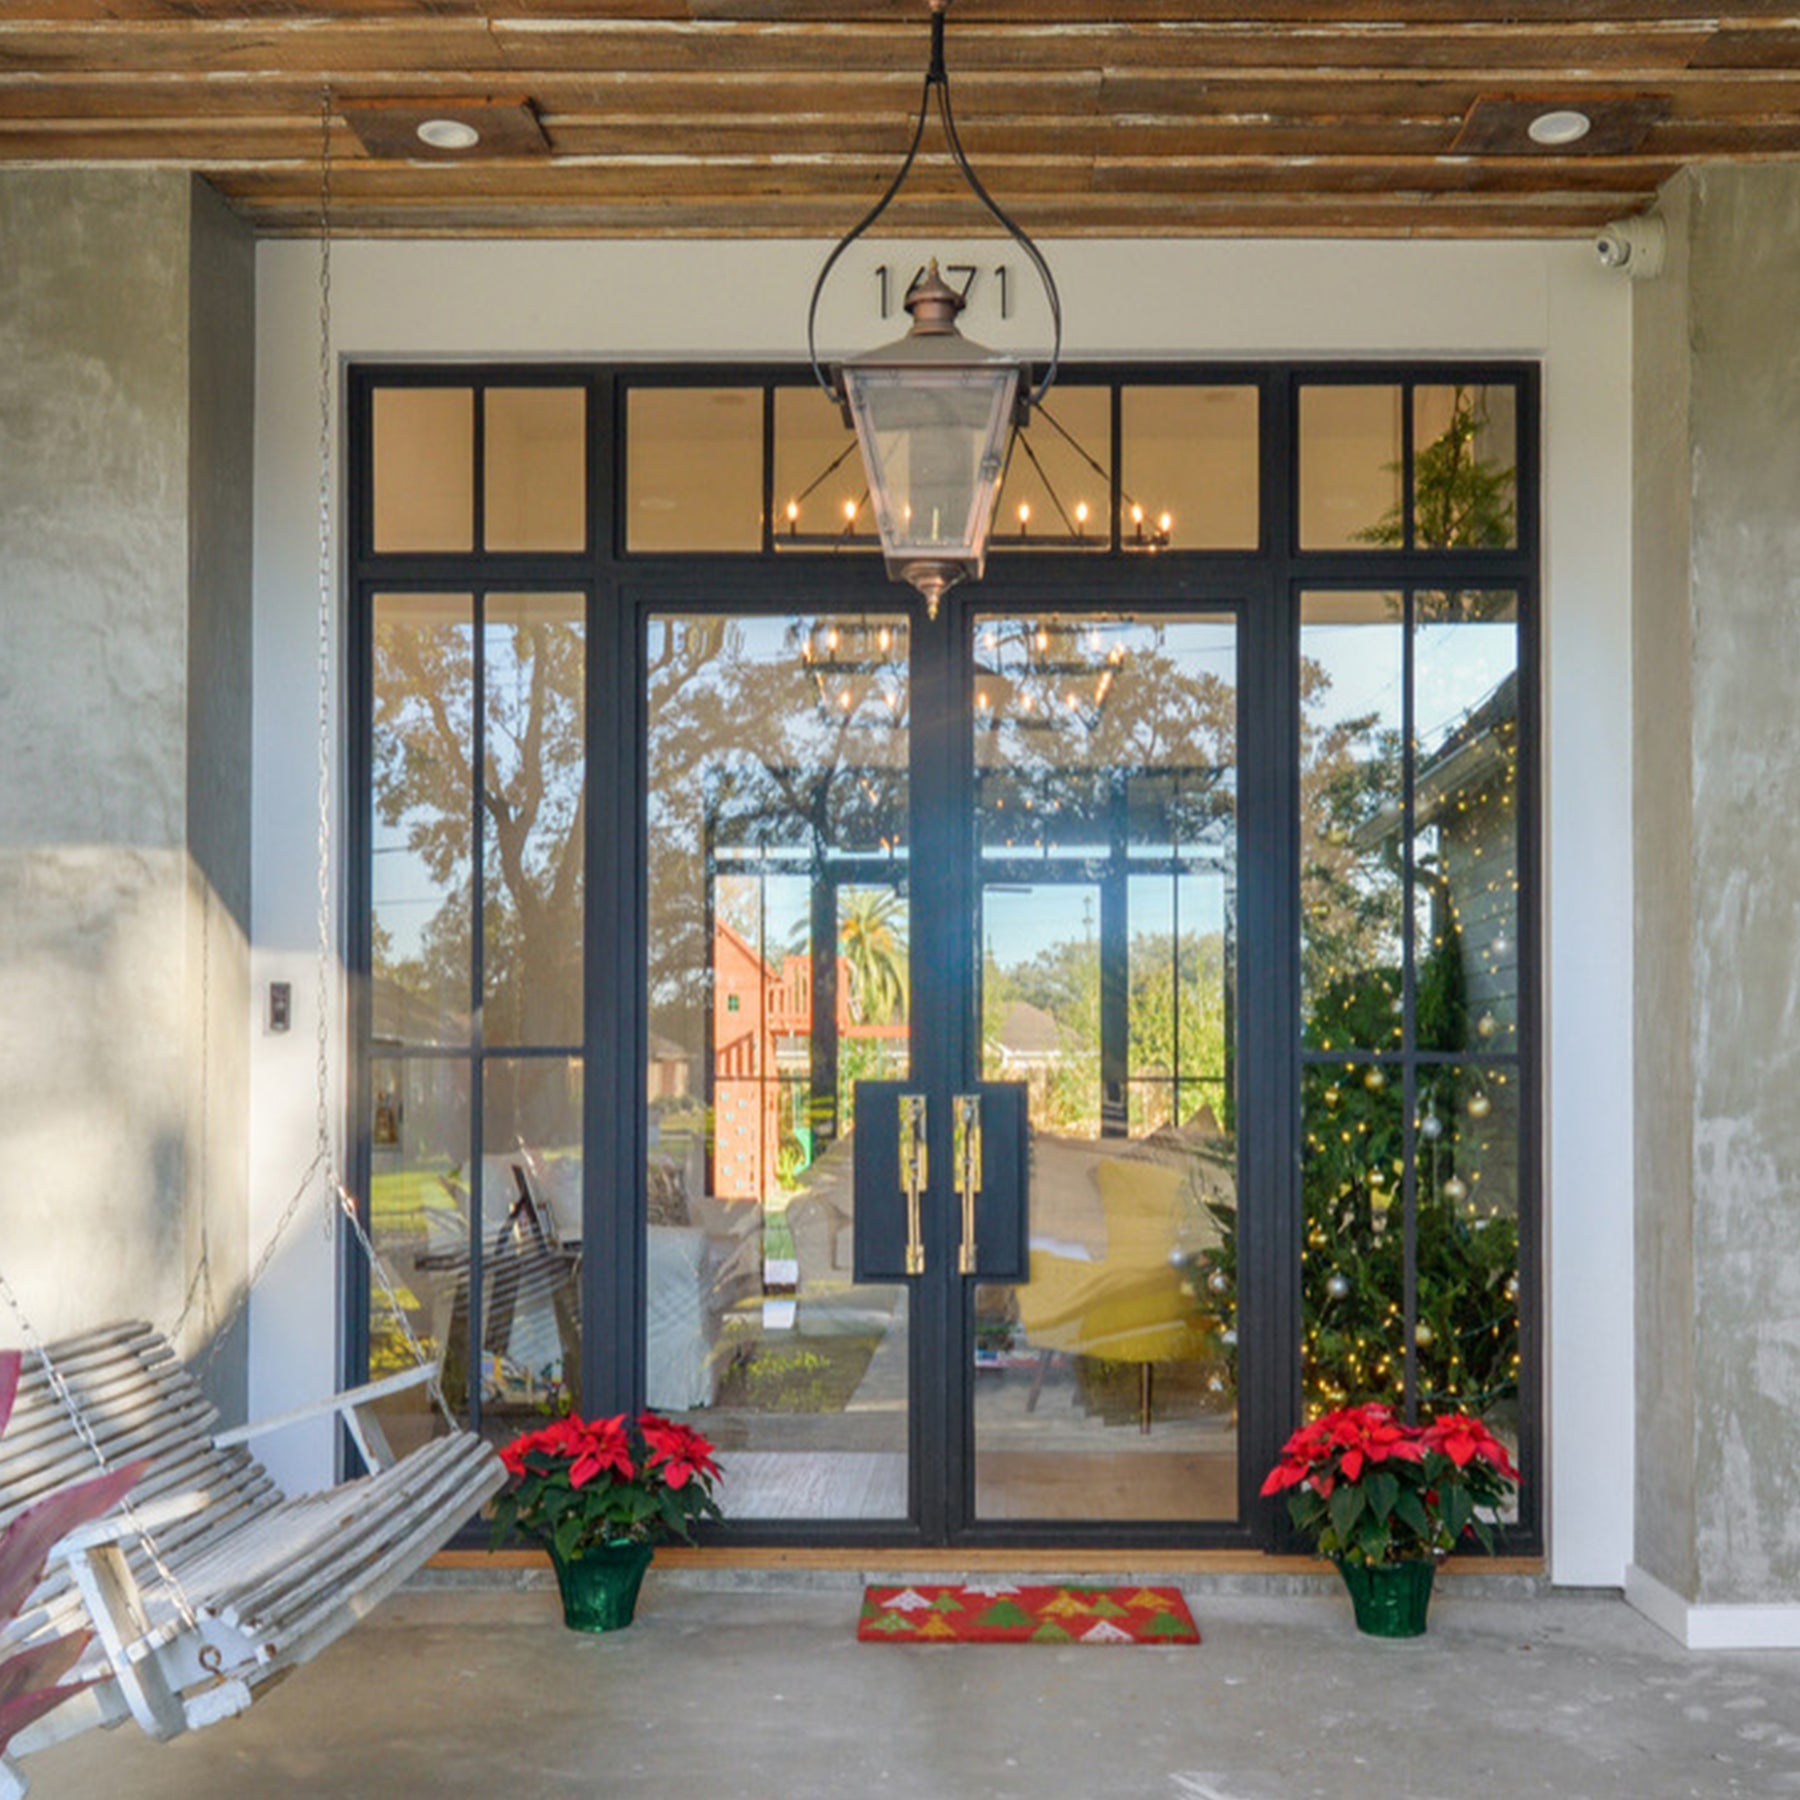 gloryirondoors wrought steel double doors with glass panel